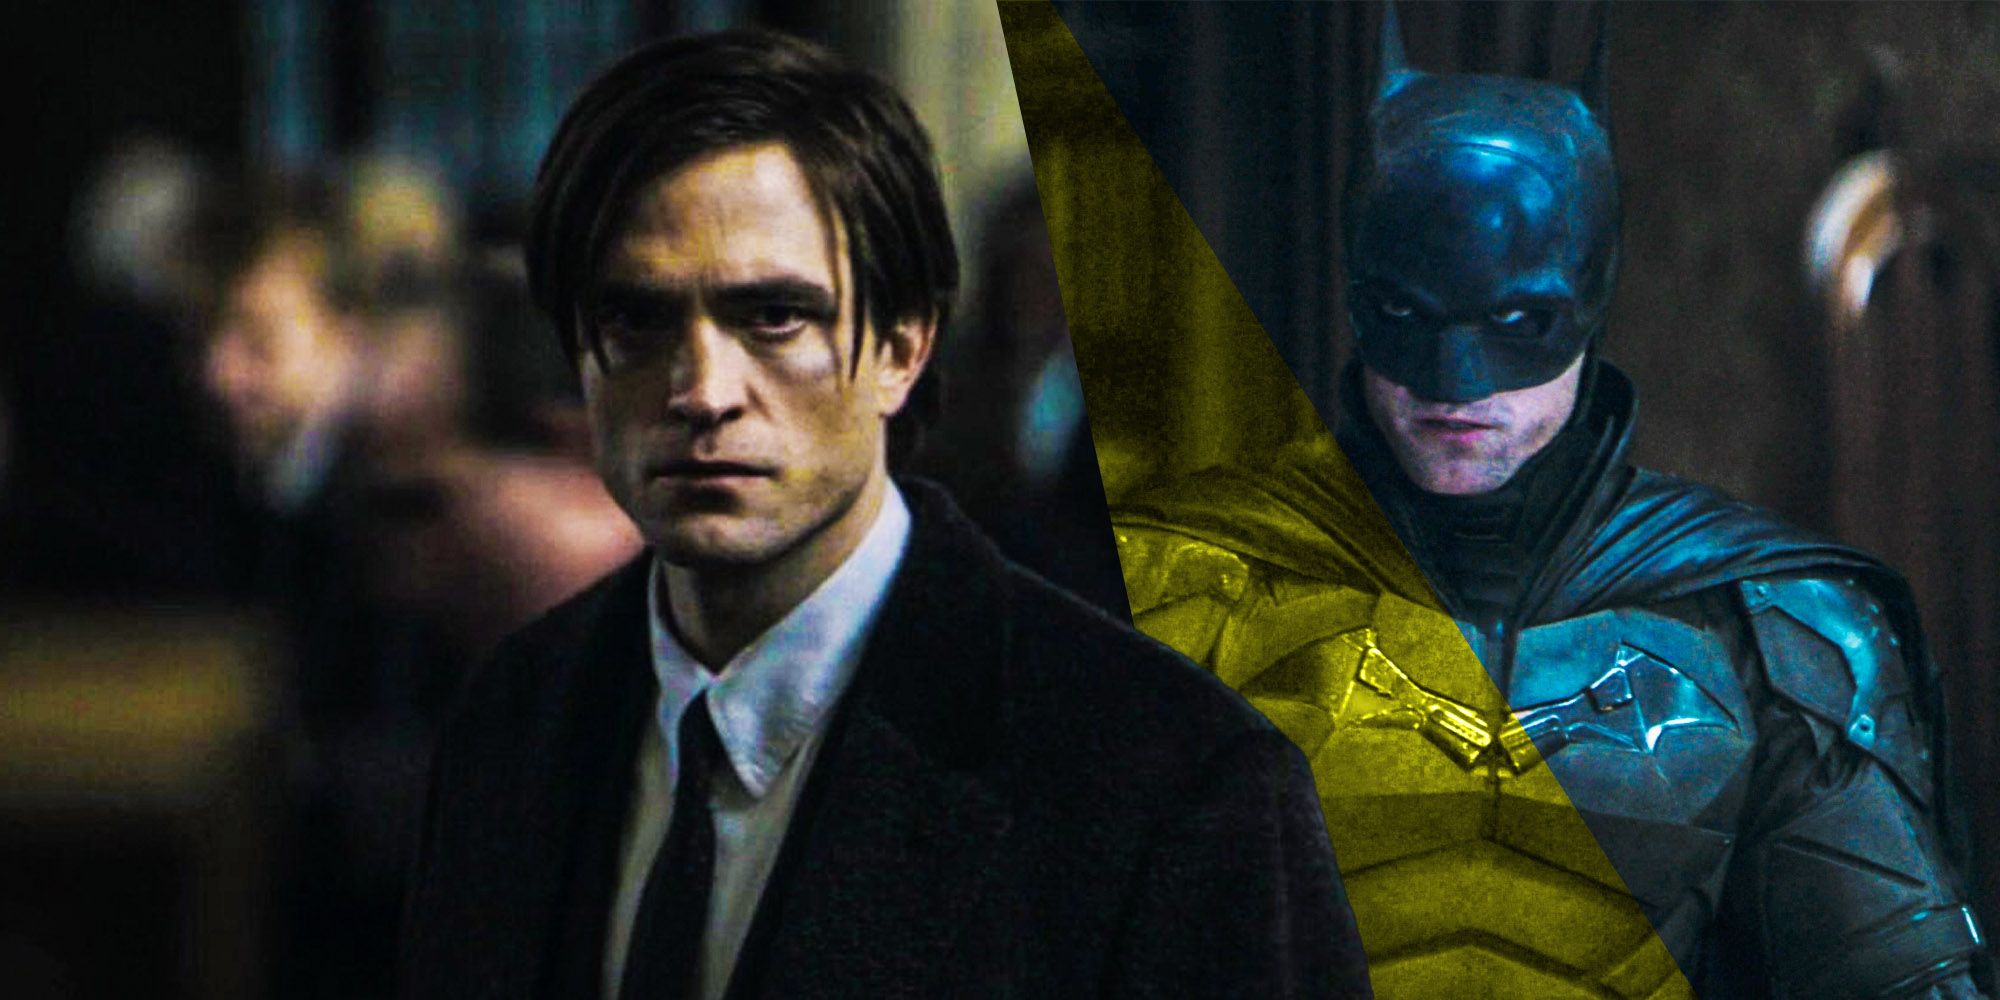 Robert pattinson the batman Can Fix A Common Batman Movie Villain Problem